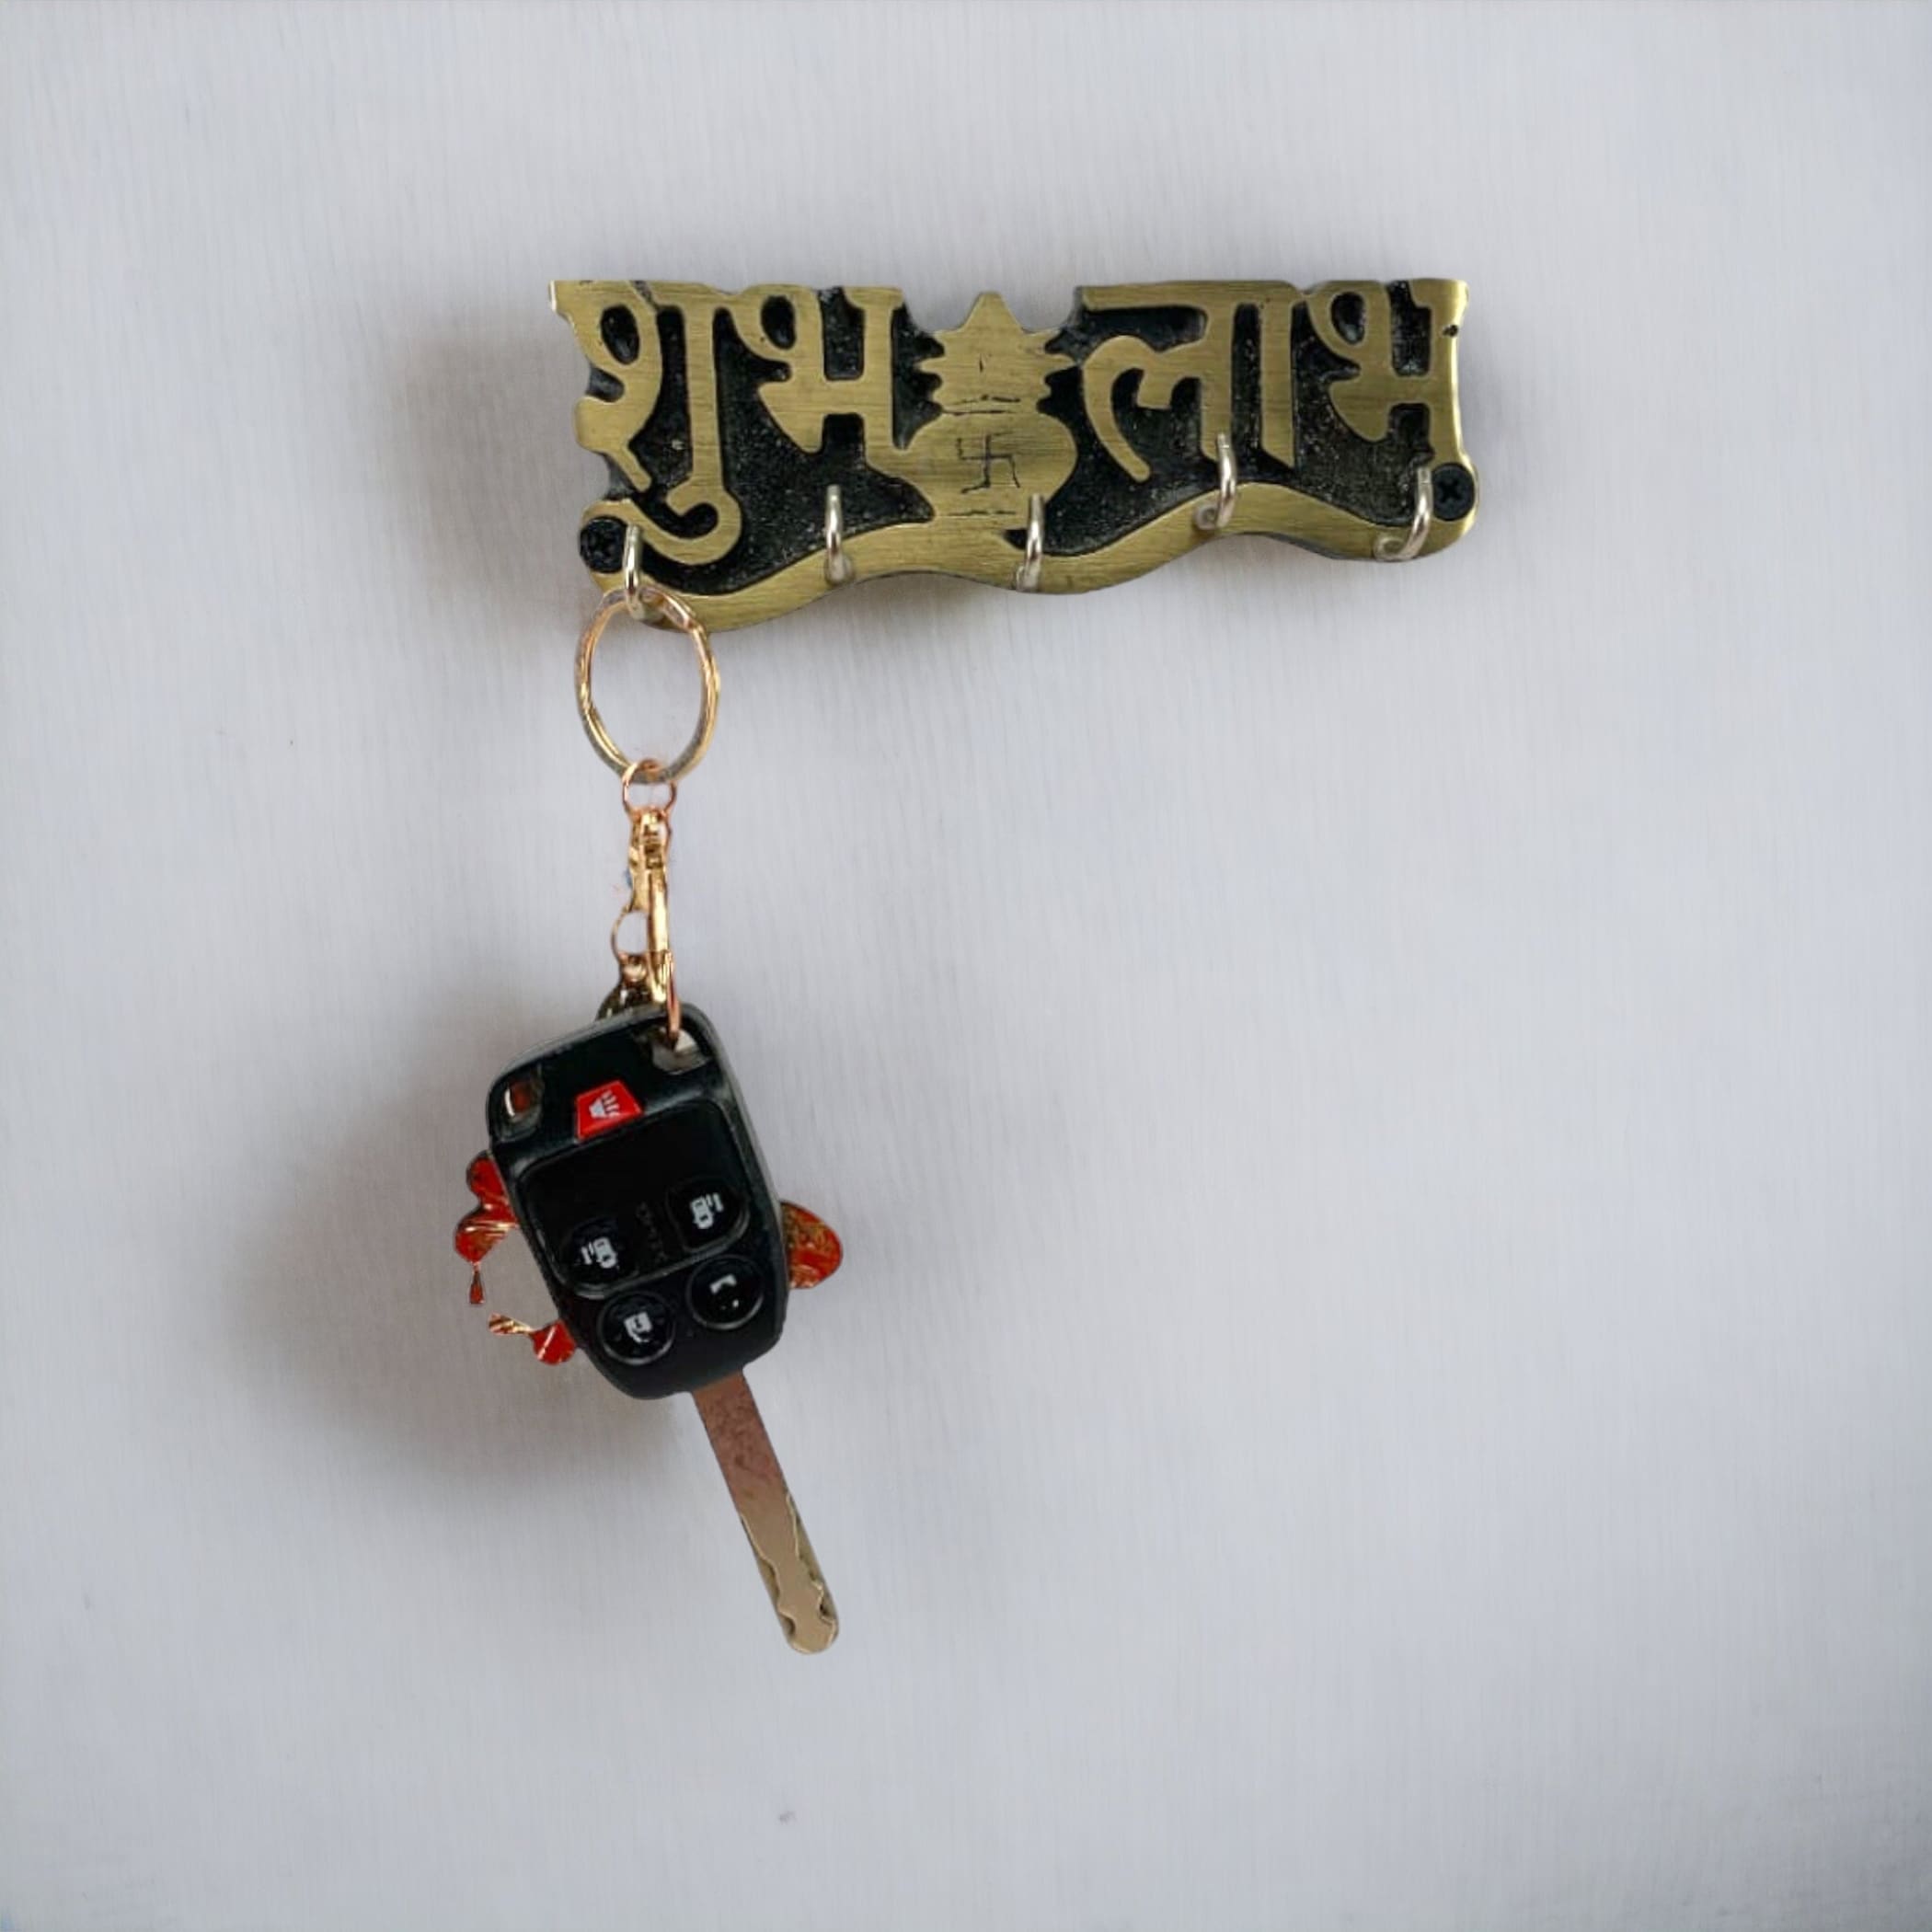 Shubh labh key holder decorative and jewelry organiser